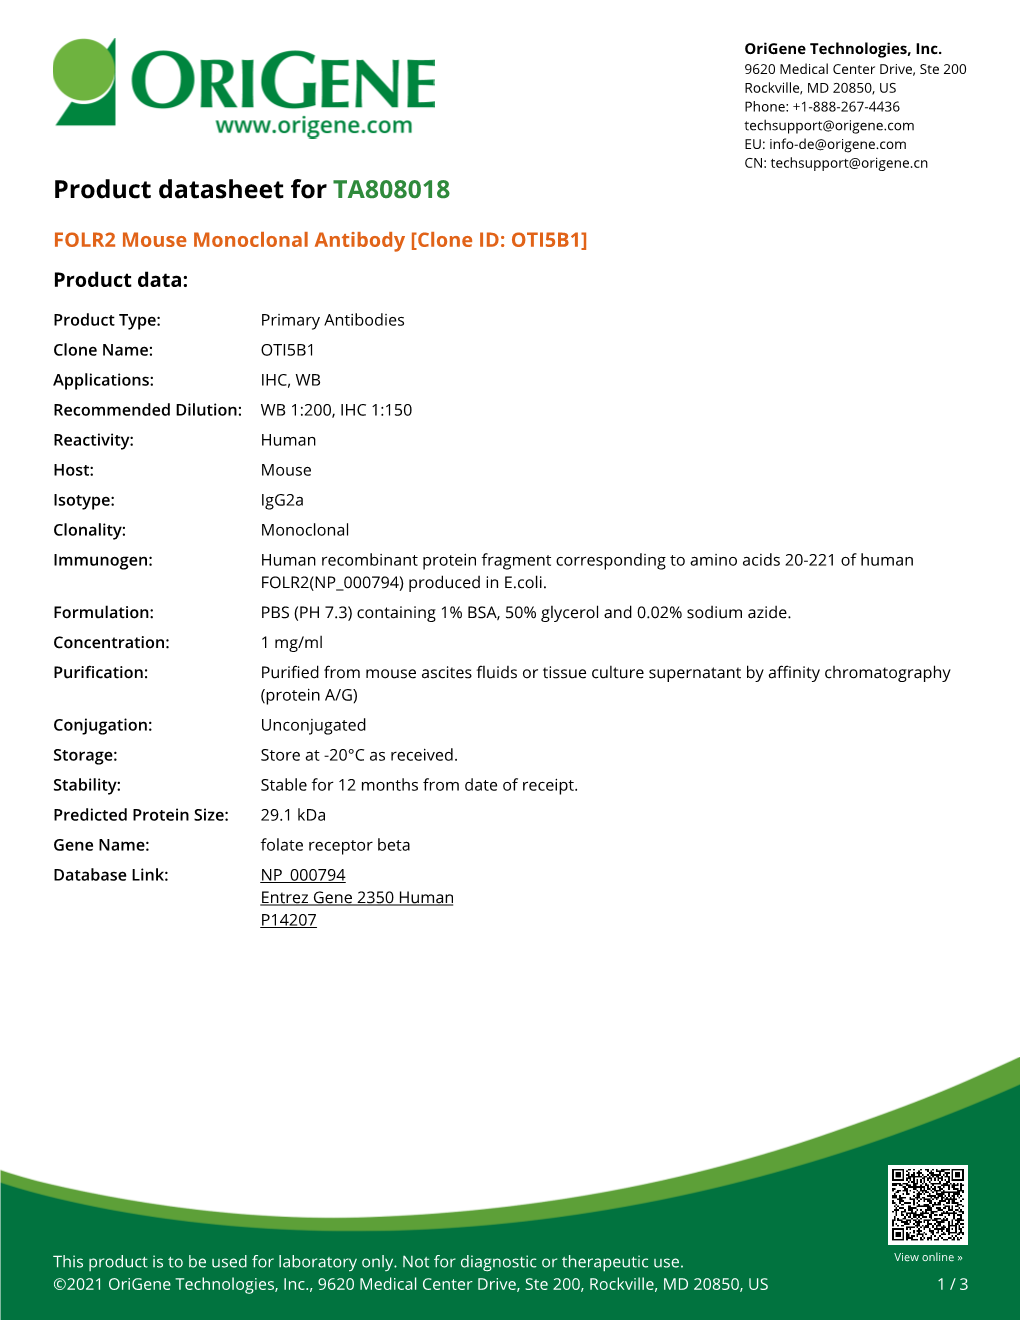 FOLR2 Mouse Monoclonal Antibody [Clone ID: OTI5B1] Product Data